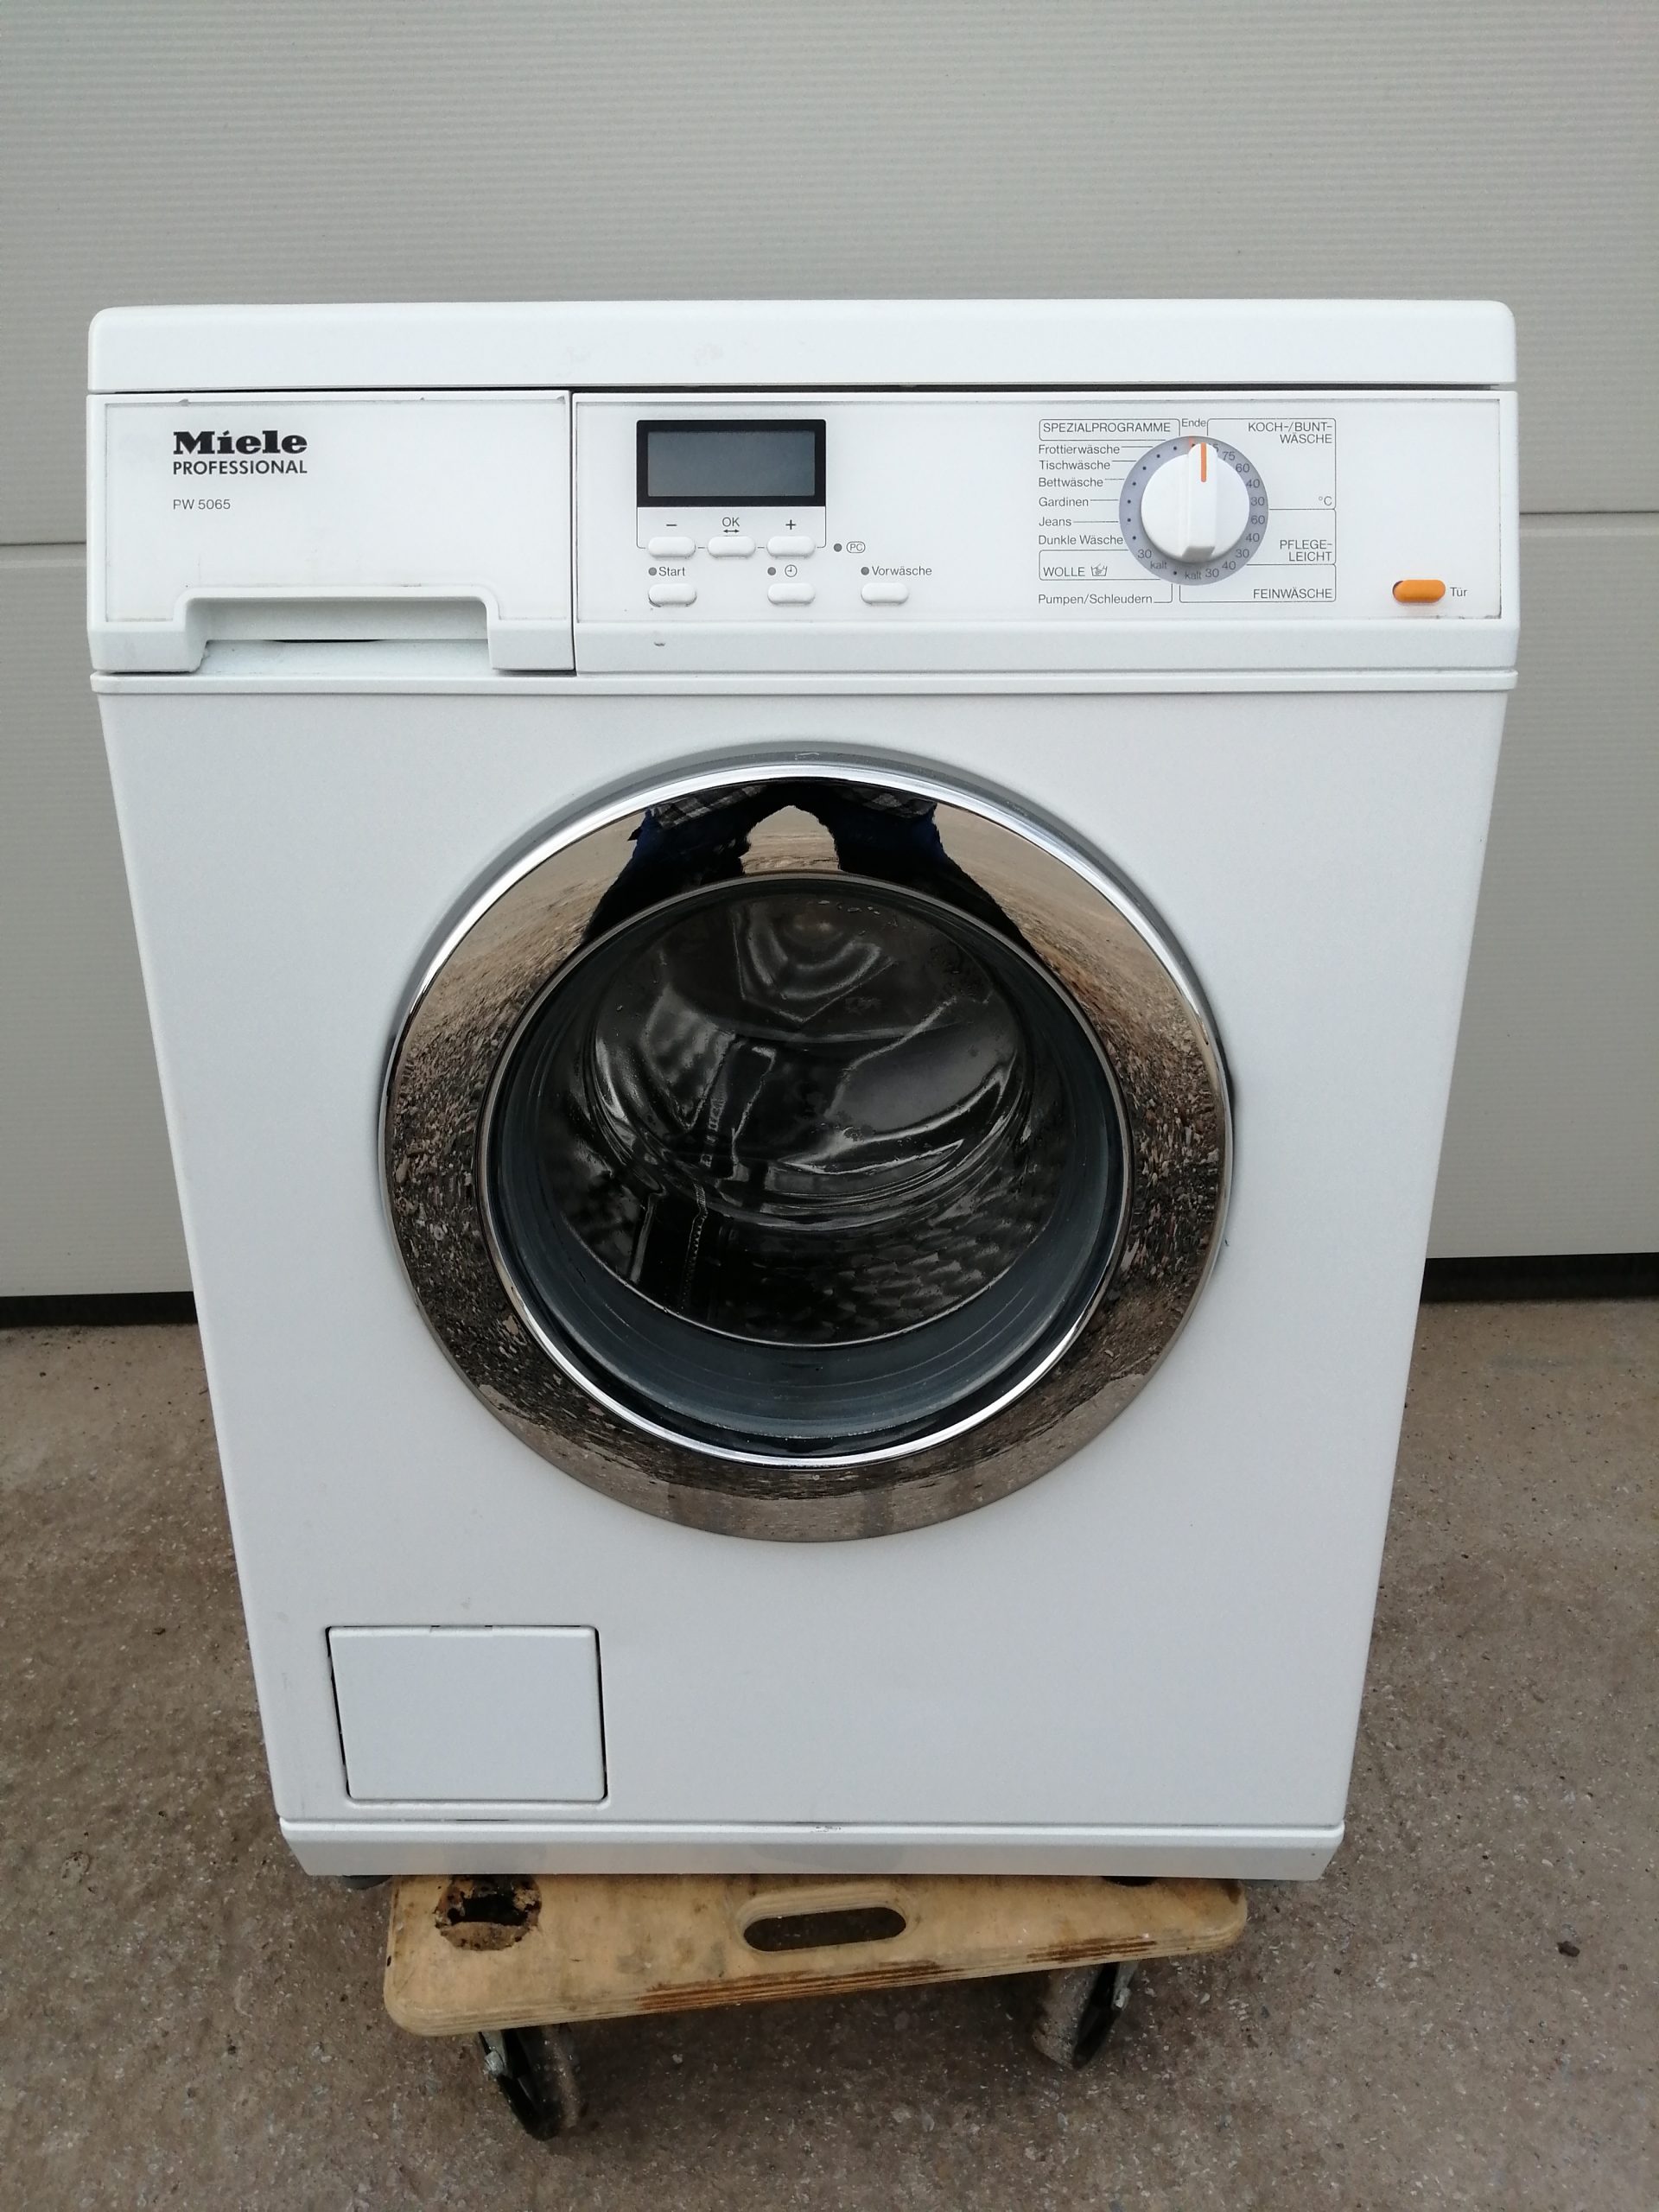 Miele Professional Waschmaschine PW 5065 LG